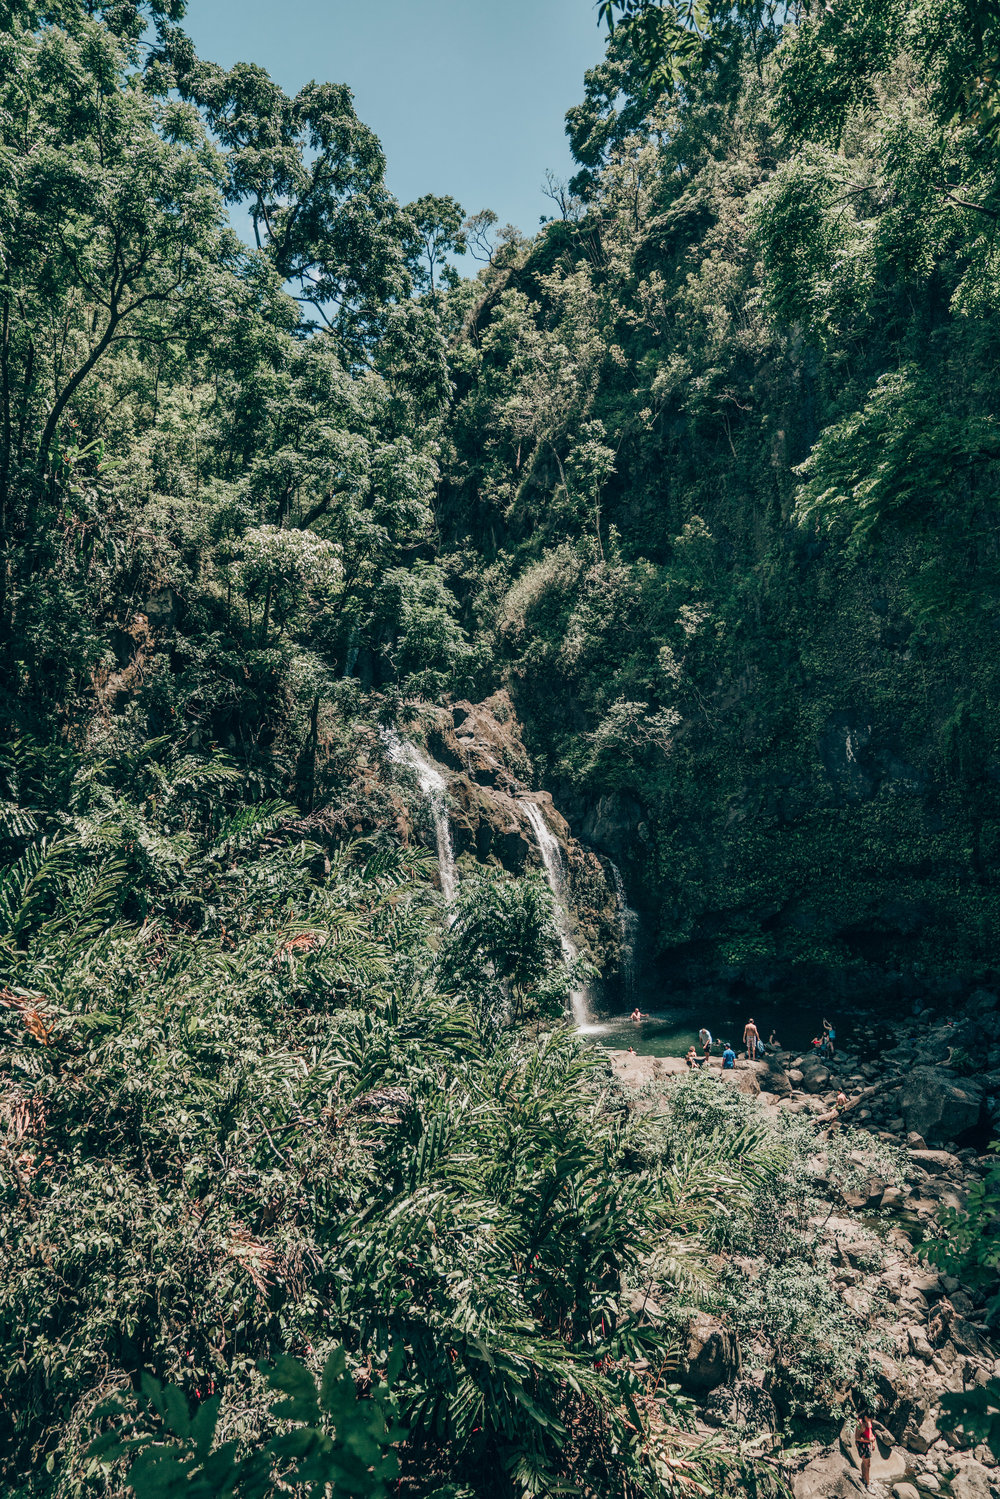 Upper Waikani Falls aka “Three Bears Falls”